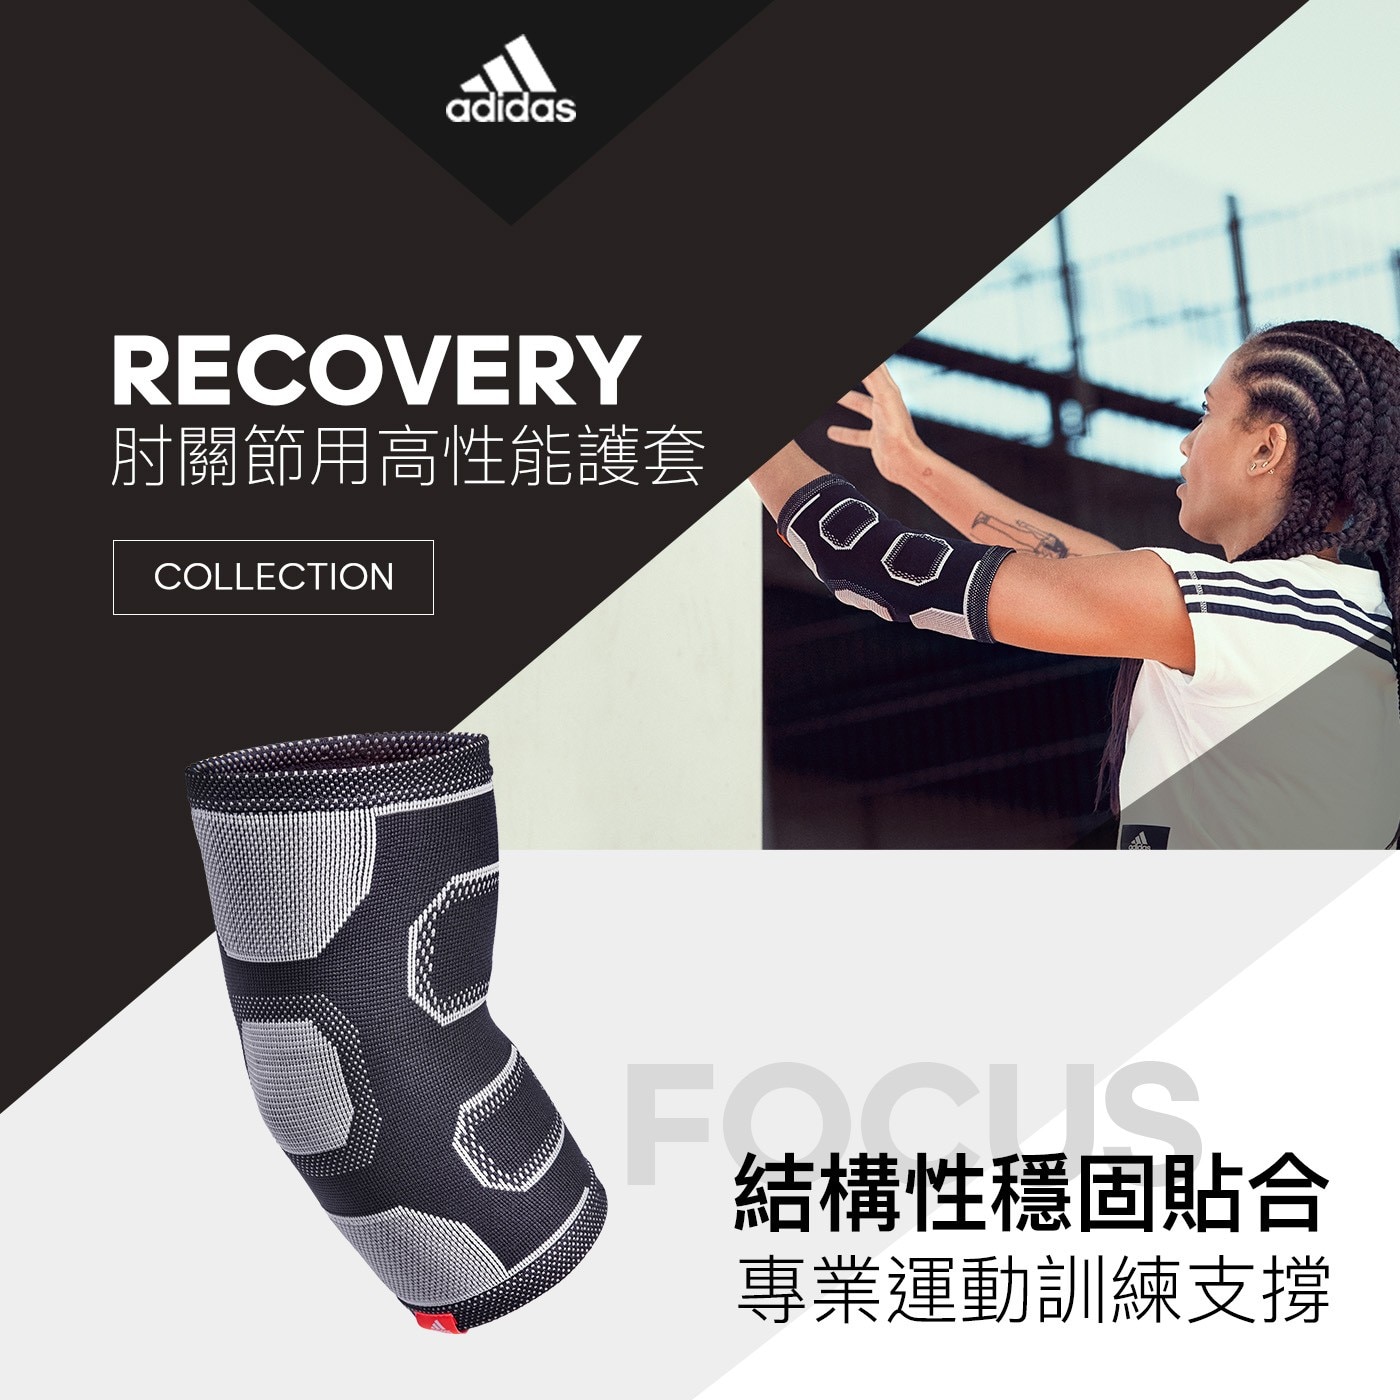 Adidas 肘關節用高性能護套 2入緩解衝擊減低震動